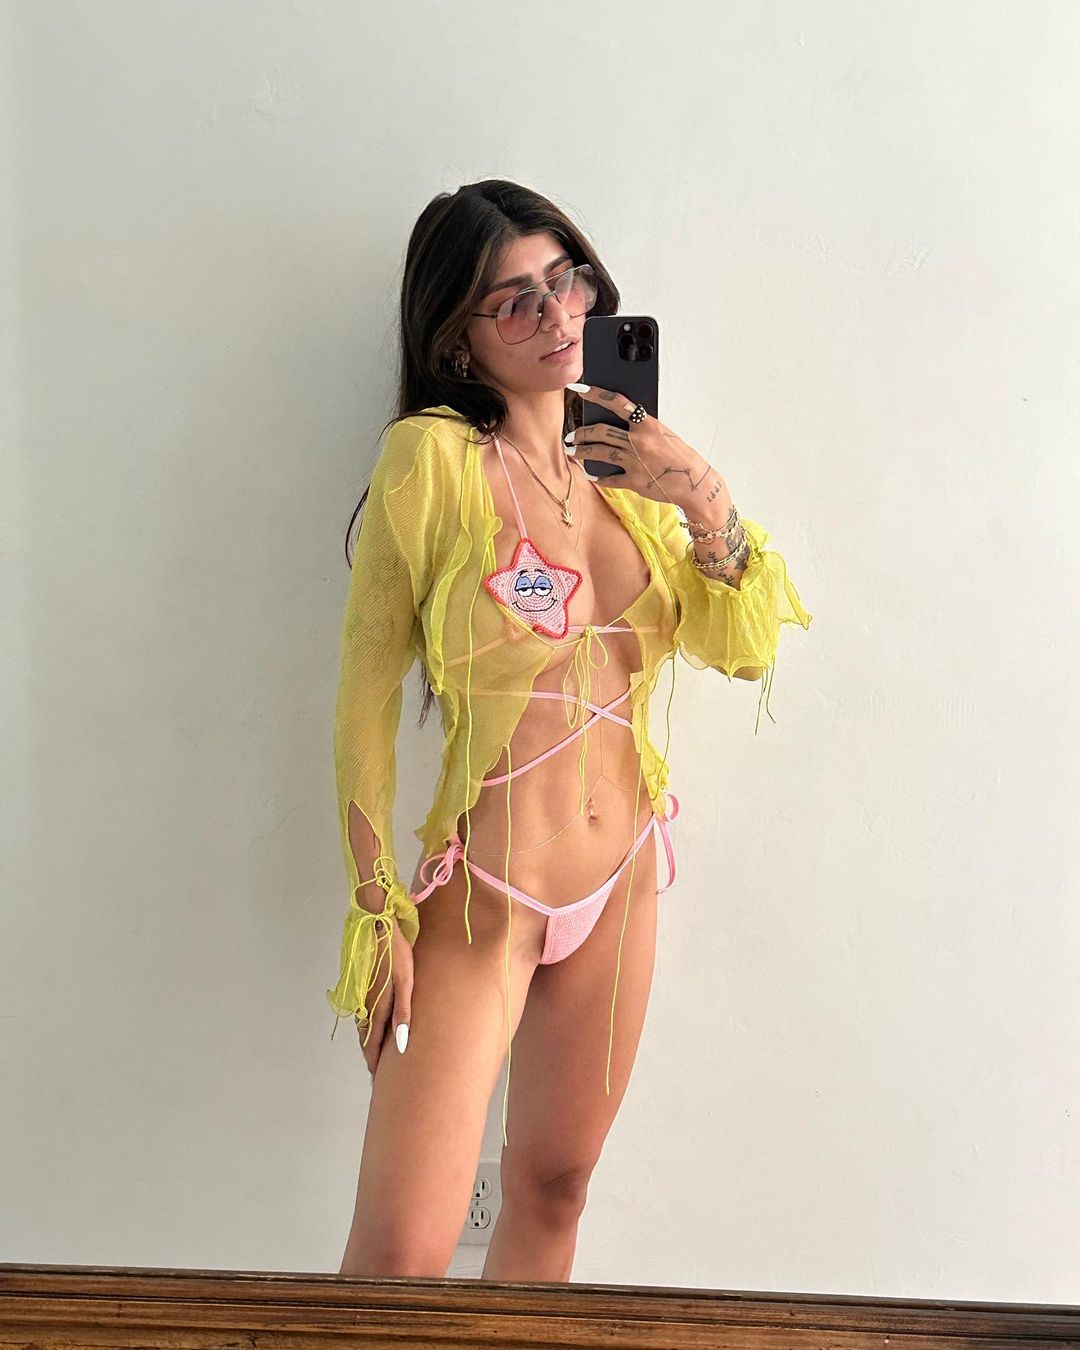 Best of Mia khalifa hot bikini